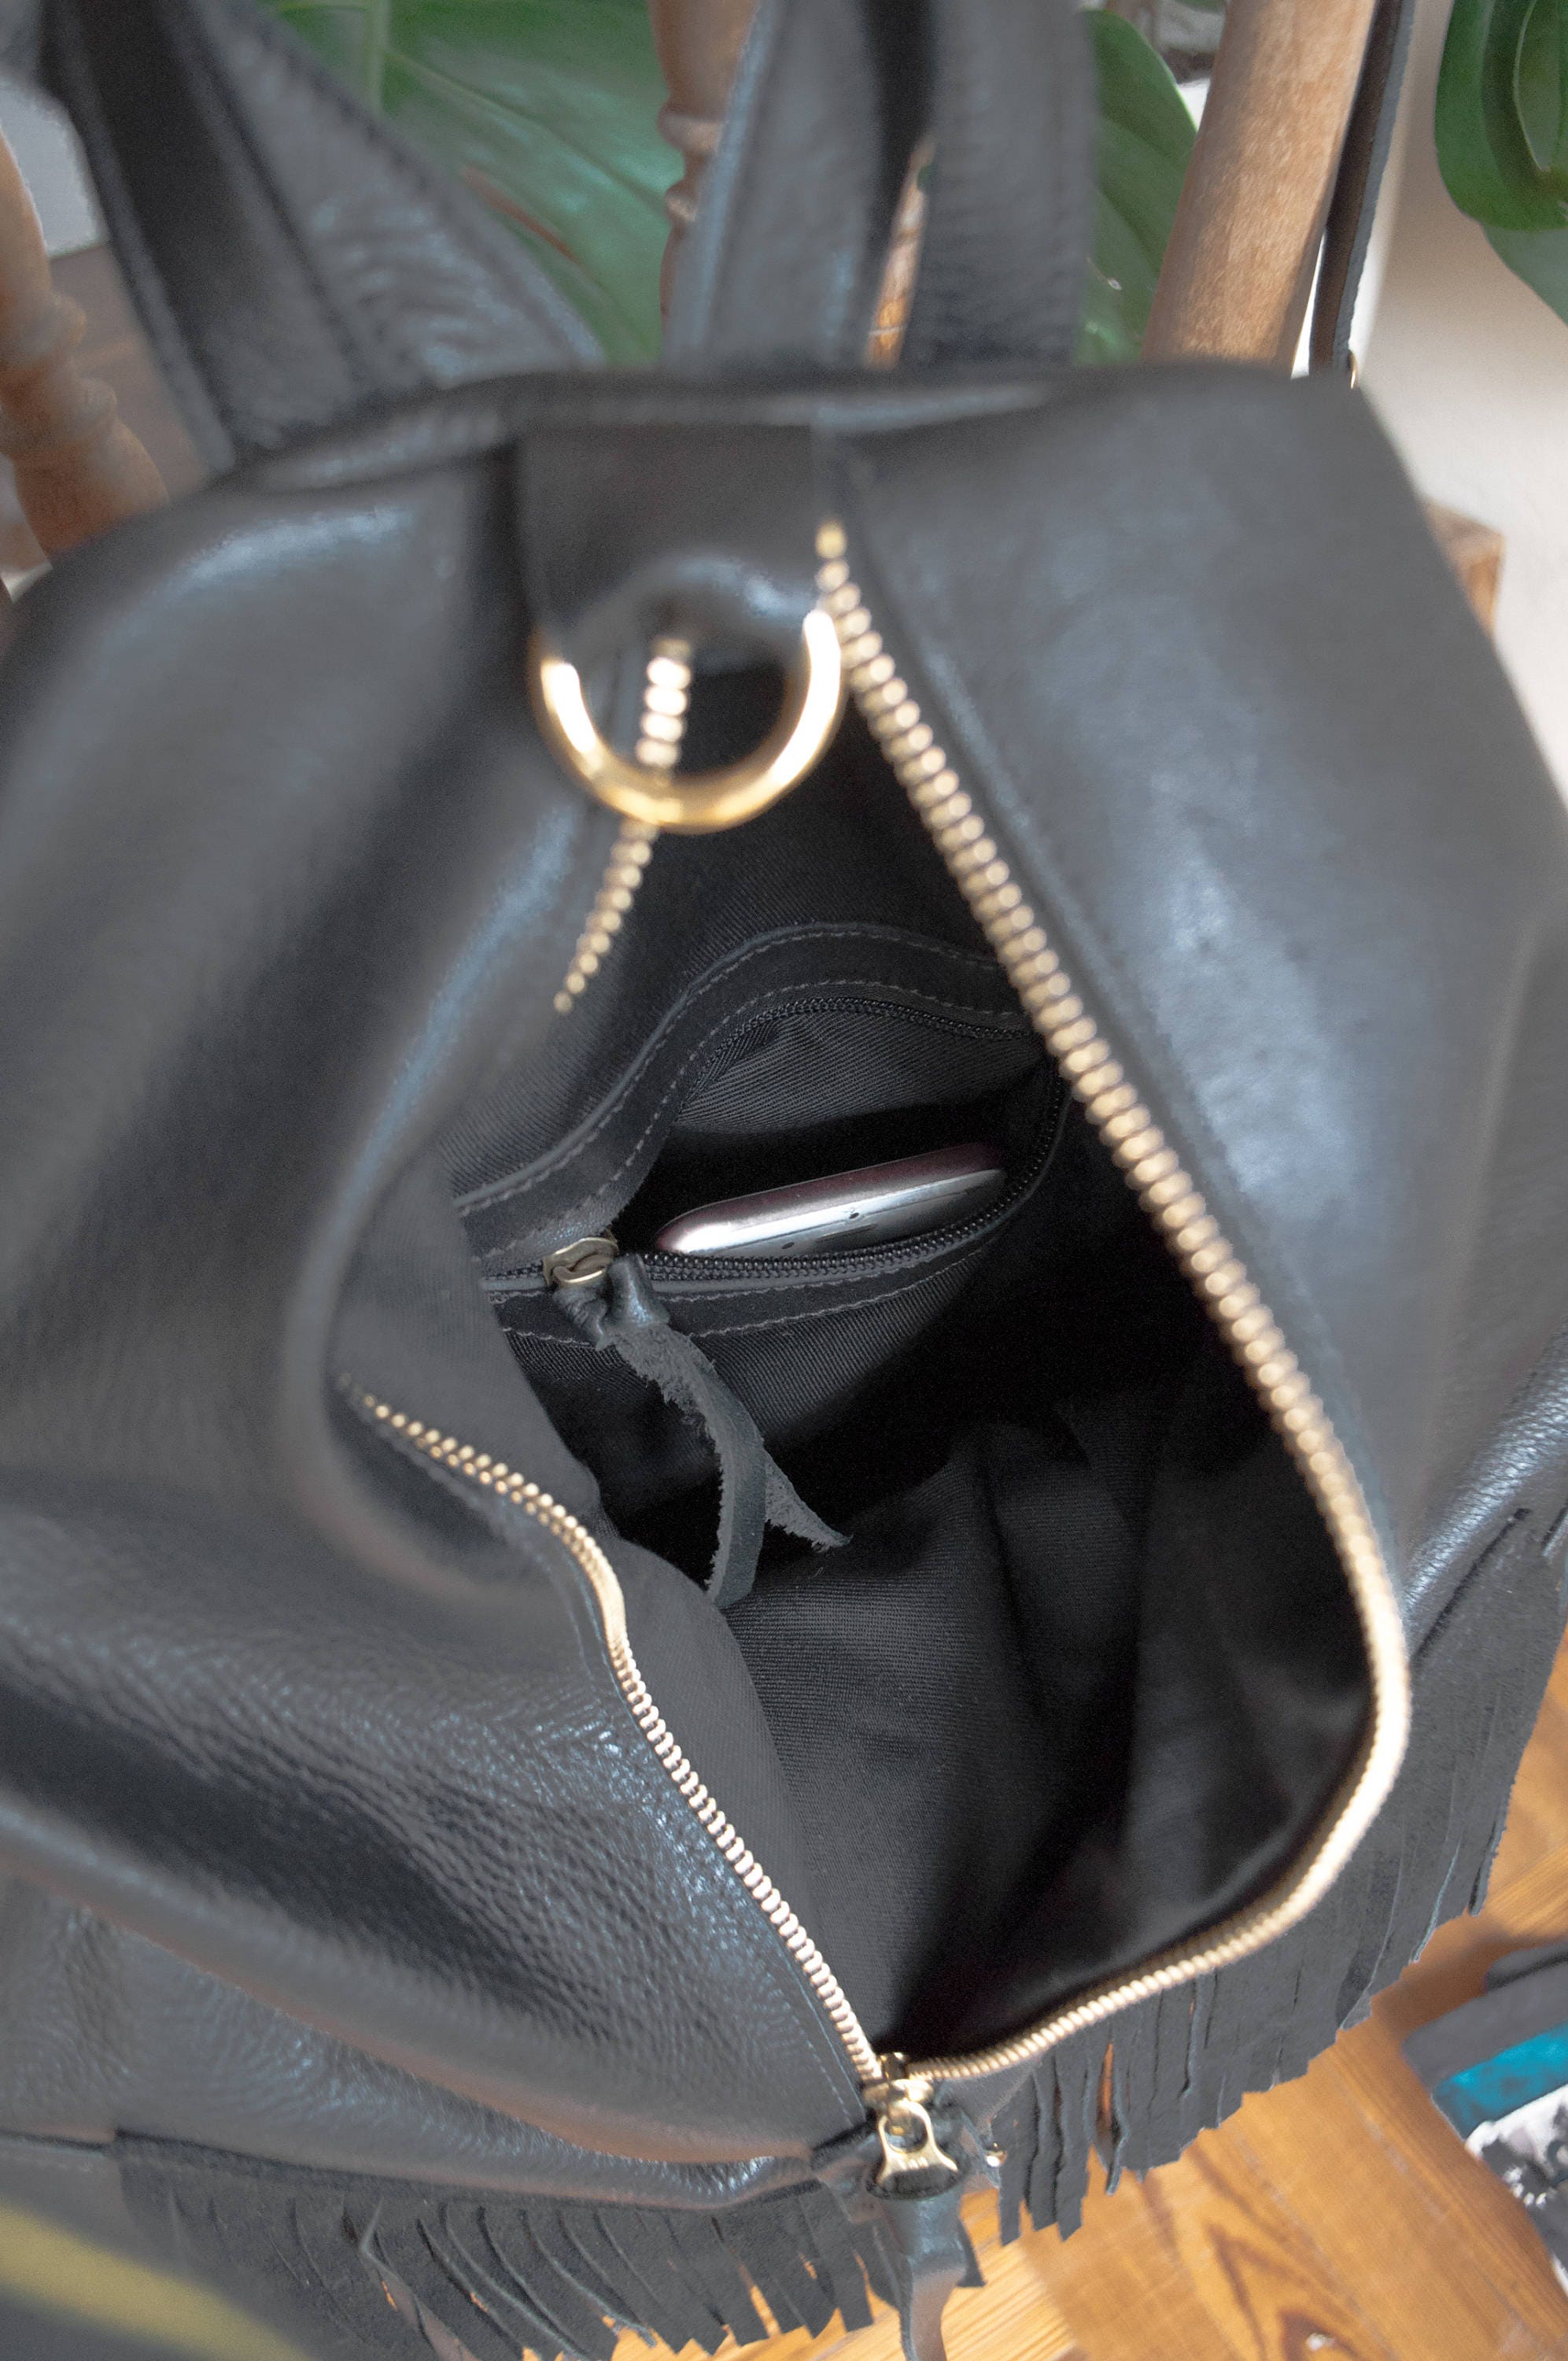 Fringe leather backpack purse Woman Black leather backpack | Etsy